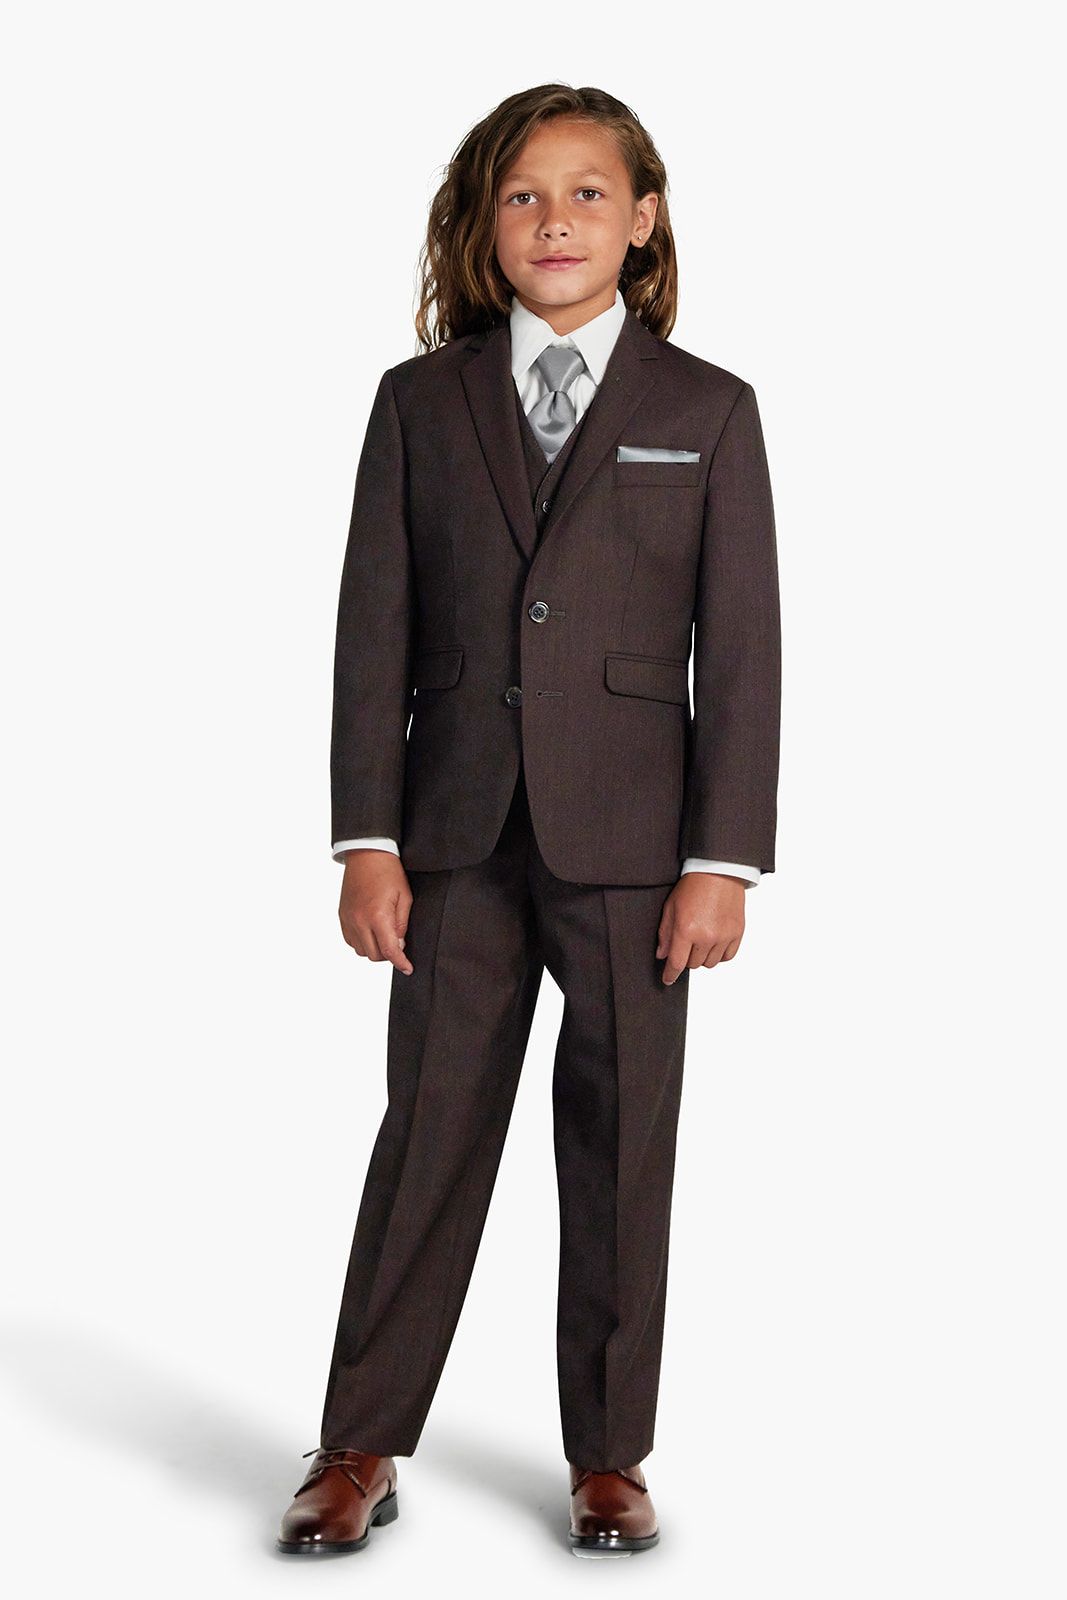 Allure Dark Brown Suit for kids, boys, children, and teens